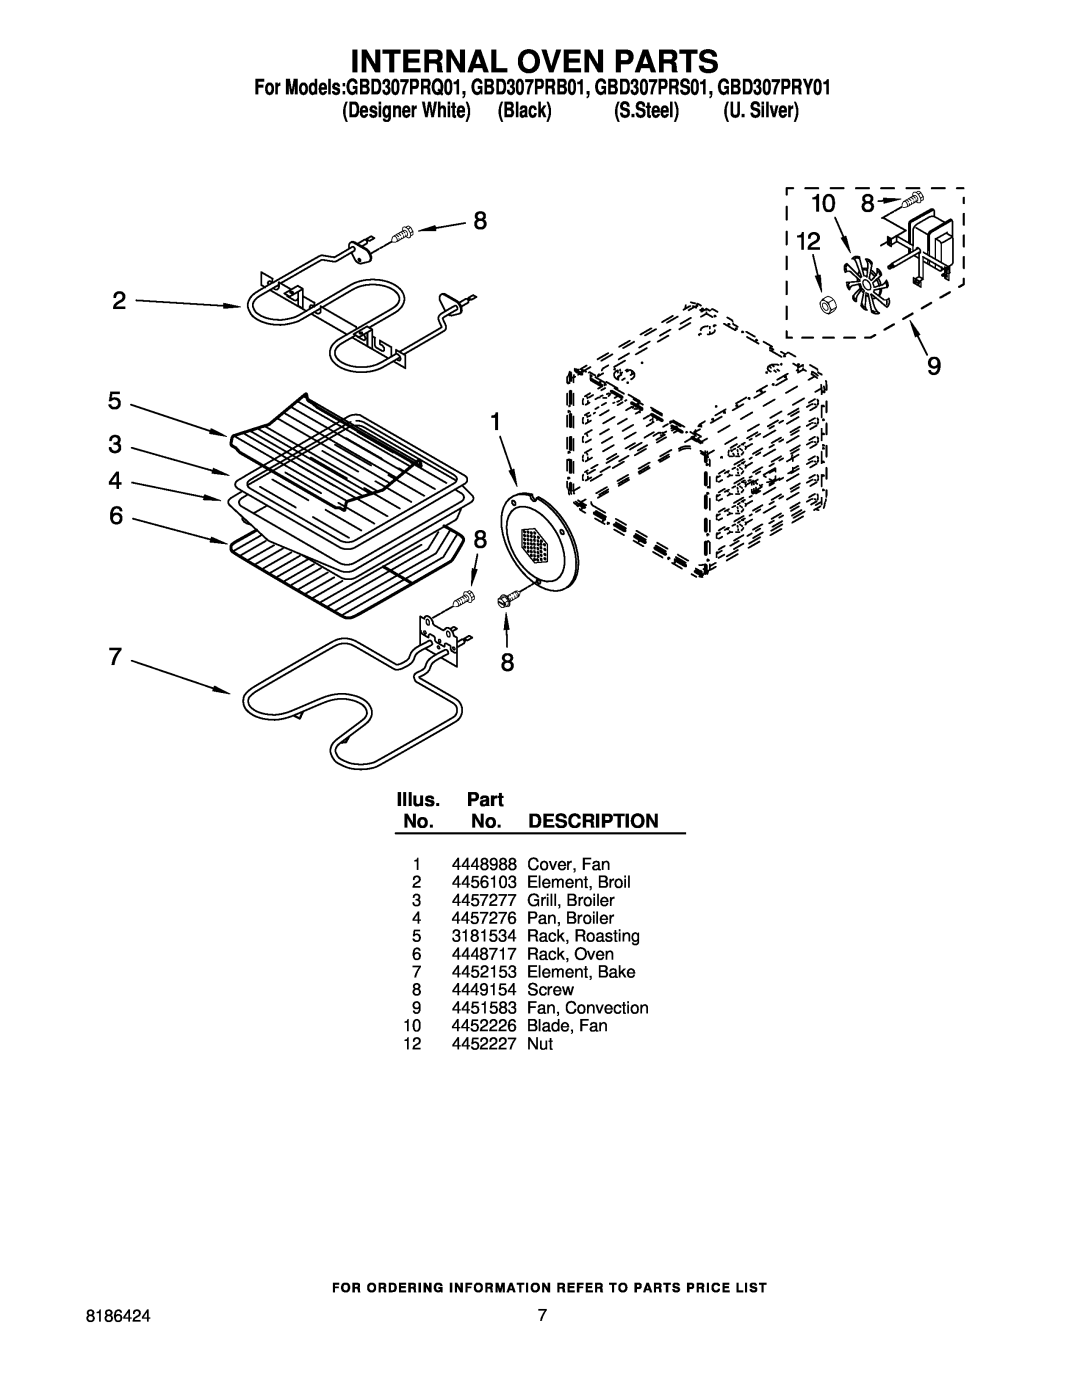 Whirlpool Internal Oven Parts, For ModelsGBD307PRQ01, GBD307PRB01, GBD307PRS01, GBD307PRY01, Black, S.Steel, U. Silver 